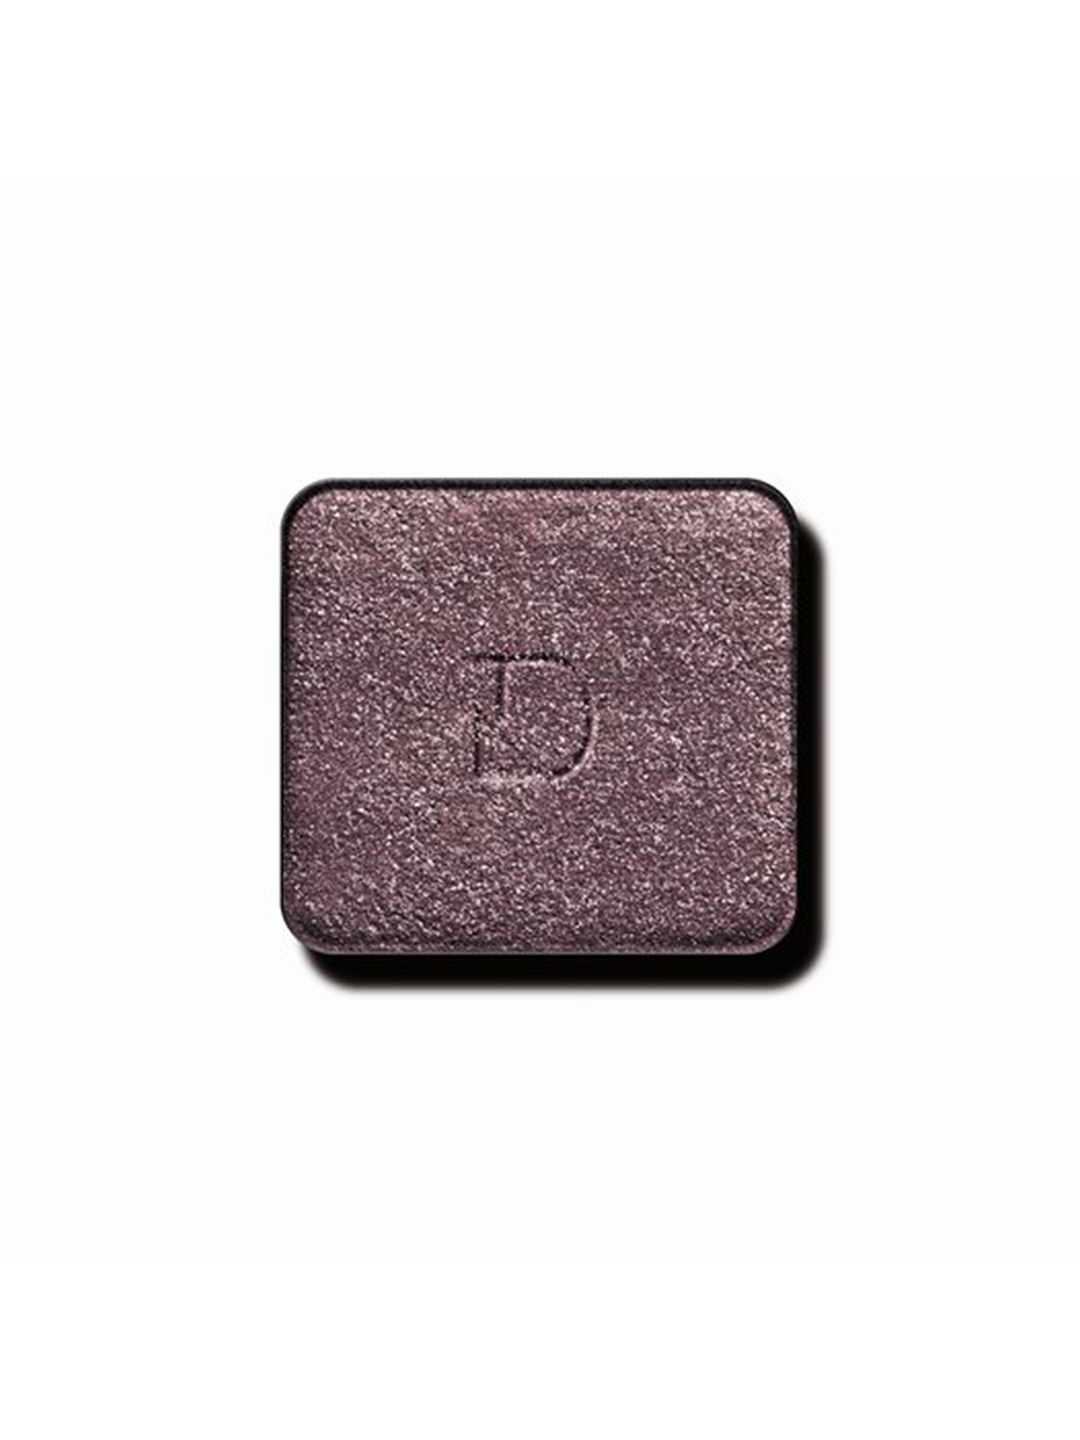 Diego dalla Palma MILANO Fine Texture Pearly Eyeshadow - Purple Storm 120 Price in India